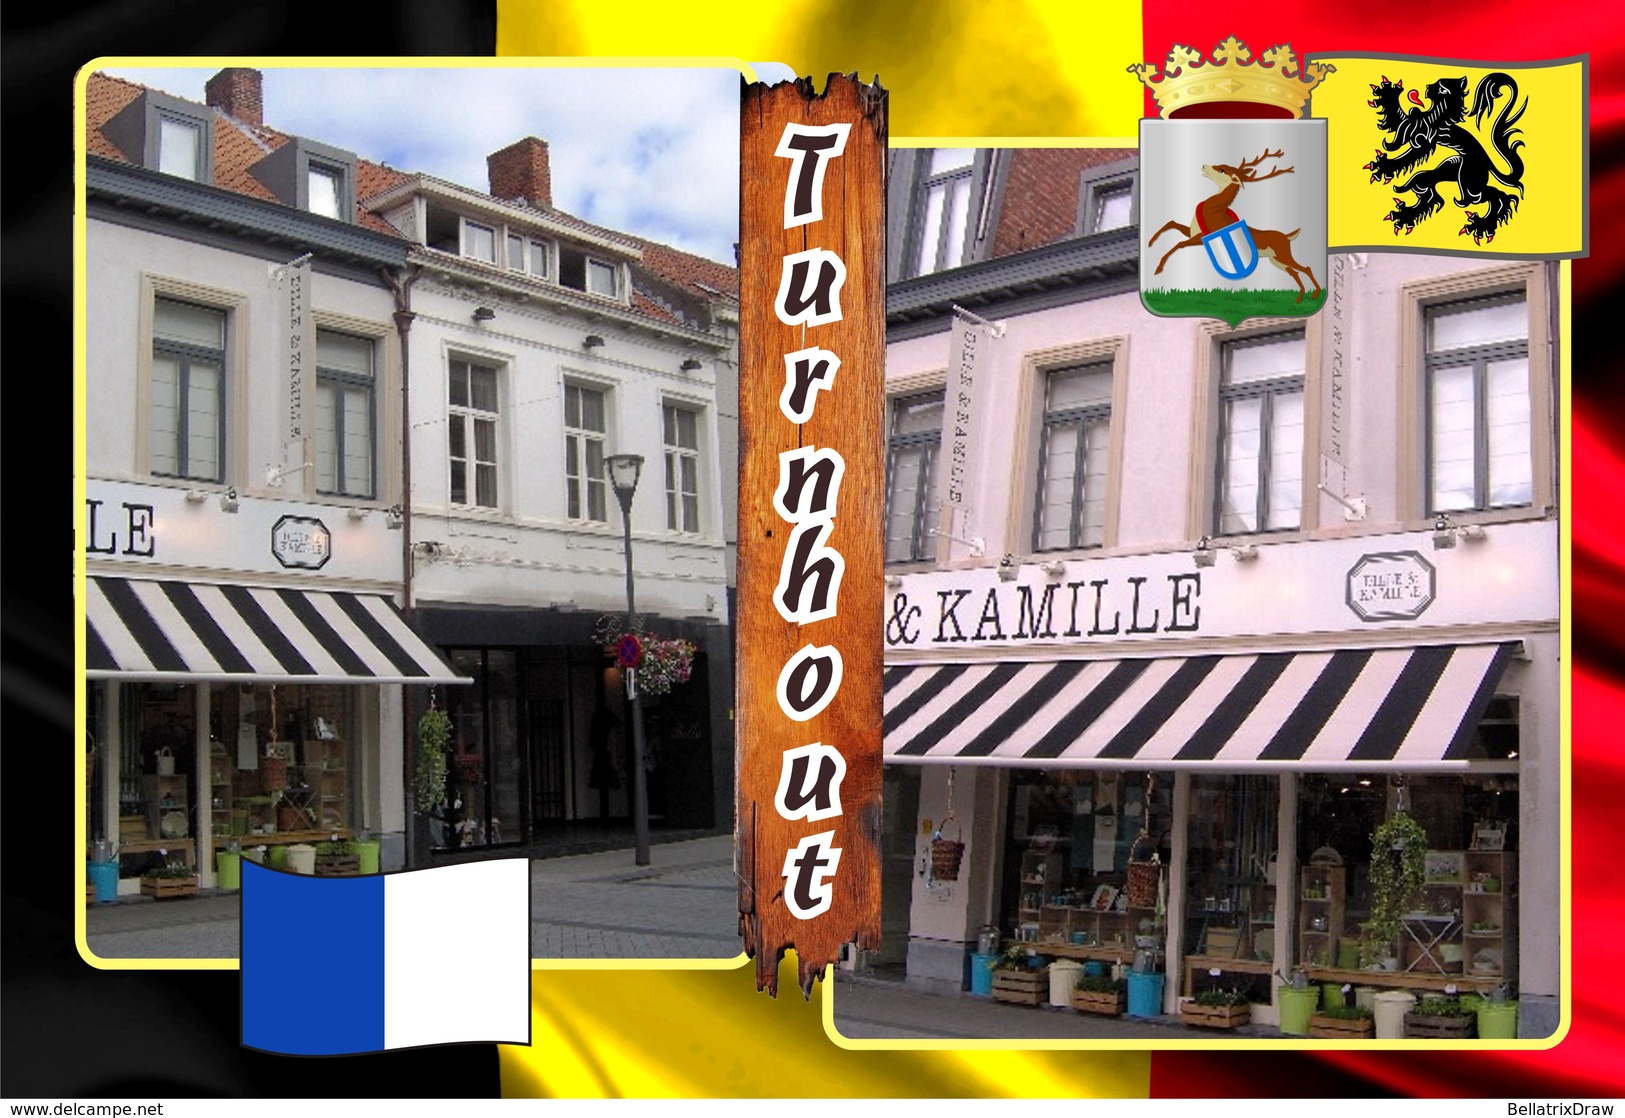 Postcards, REPRODUCTION, Municipalities of Belgium, Turnhout, duplex 346 to 396, 51 pcs.